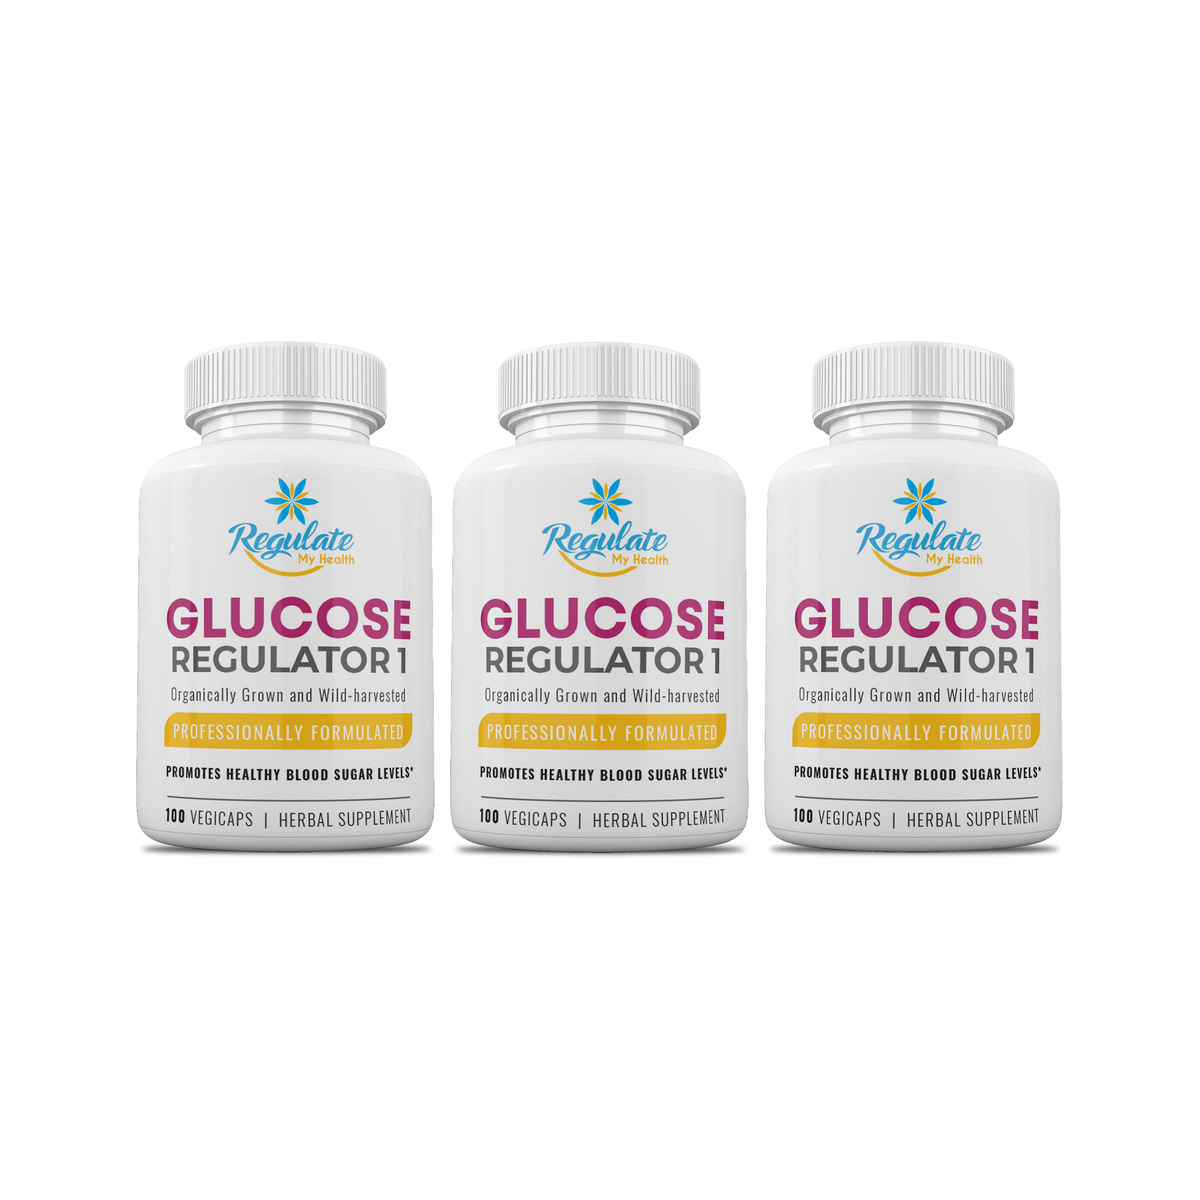 Glucose Regulator 1 *3-Month Supply Special